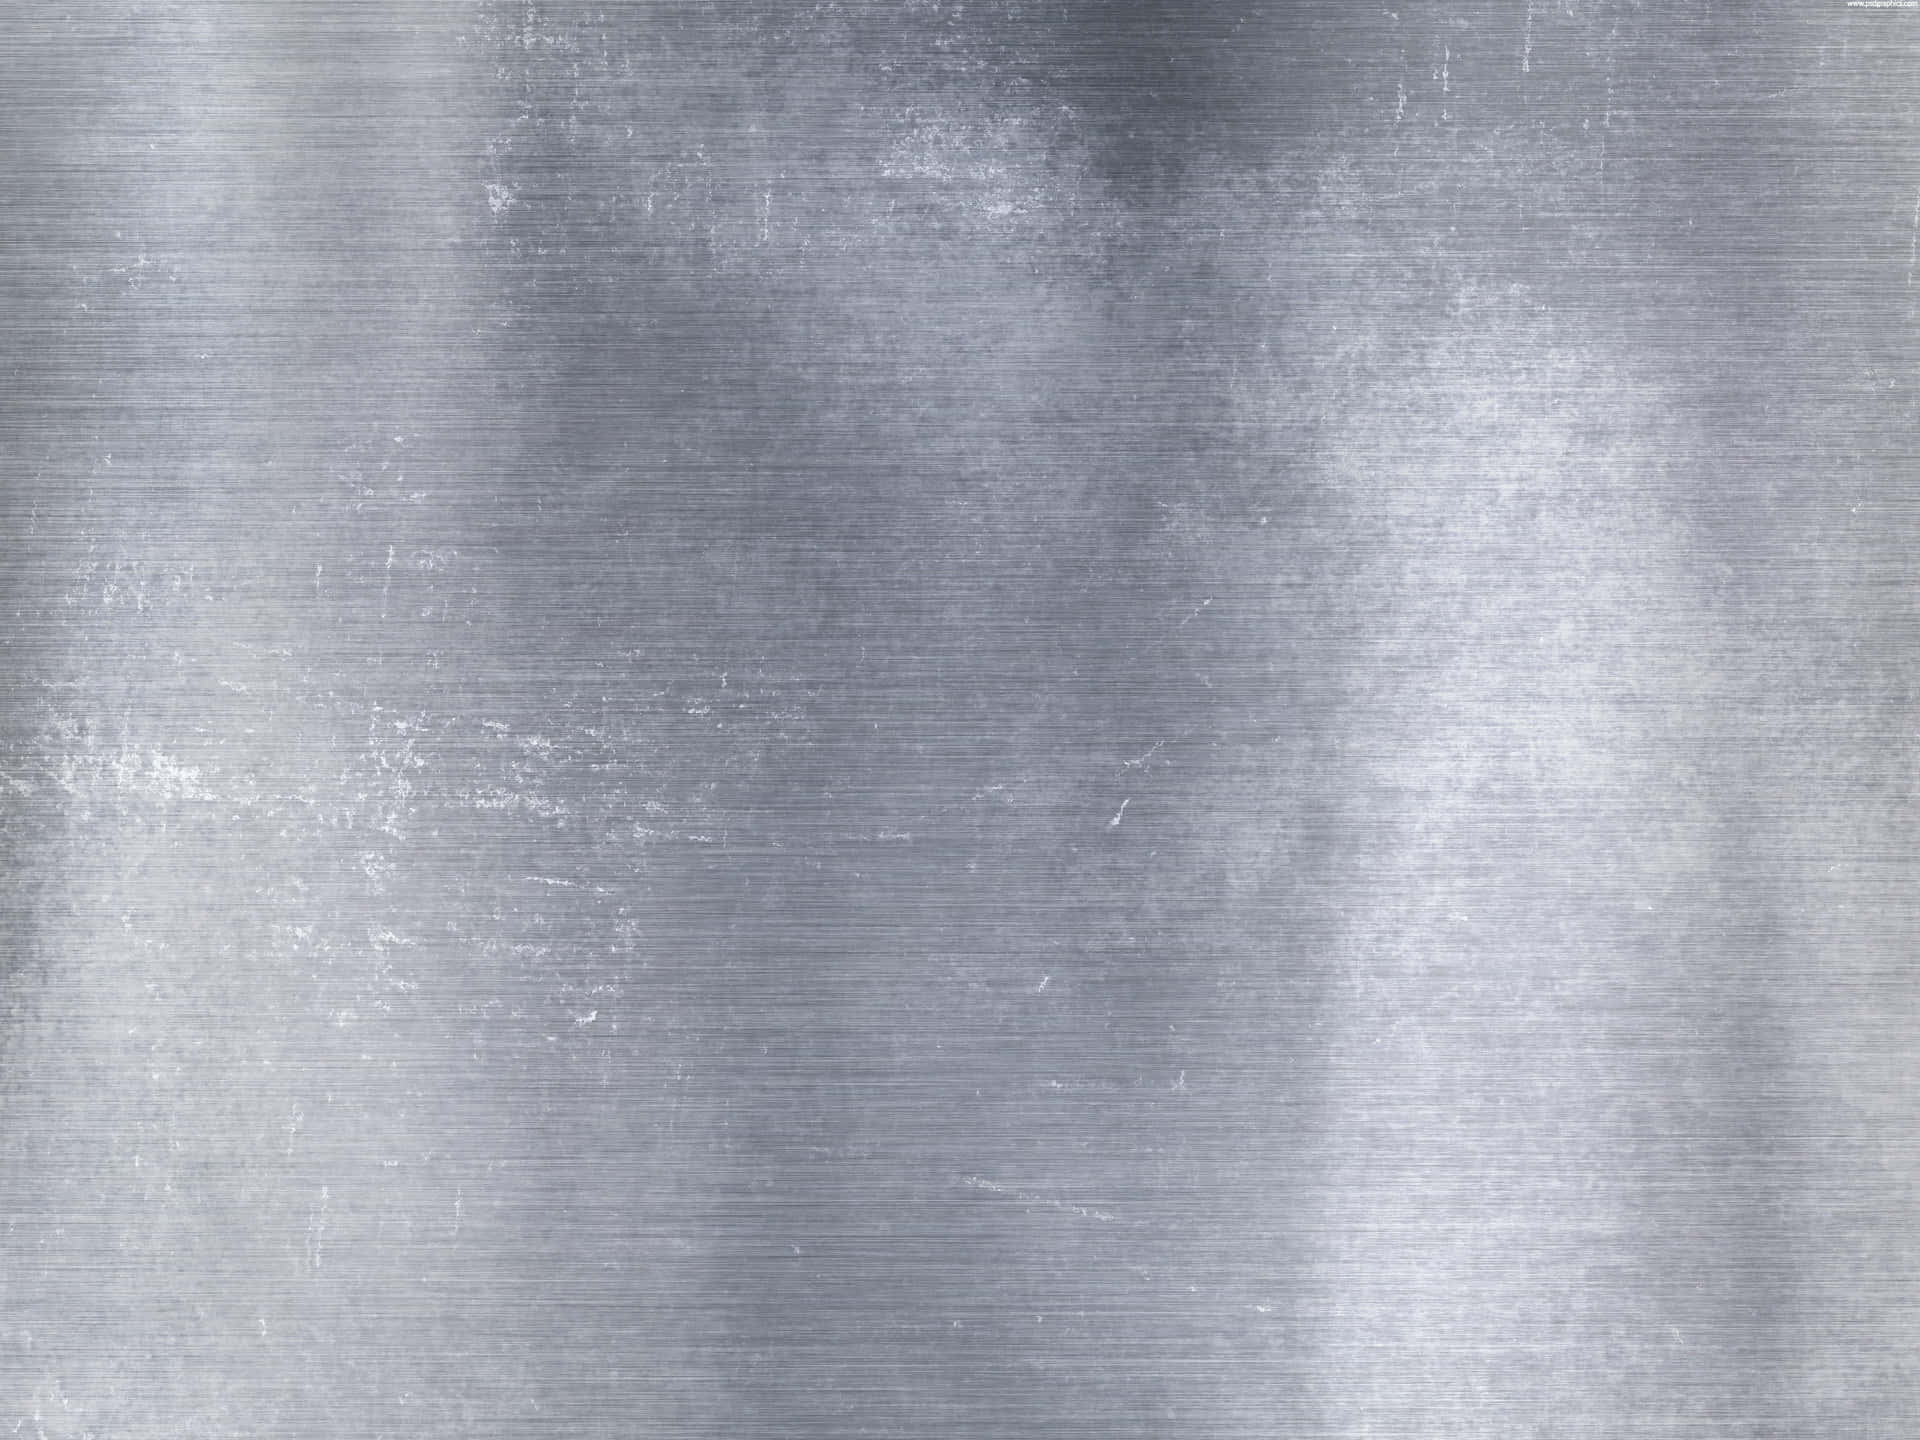 Silver Foil Background Wallpaper